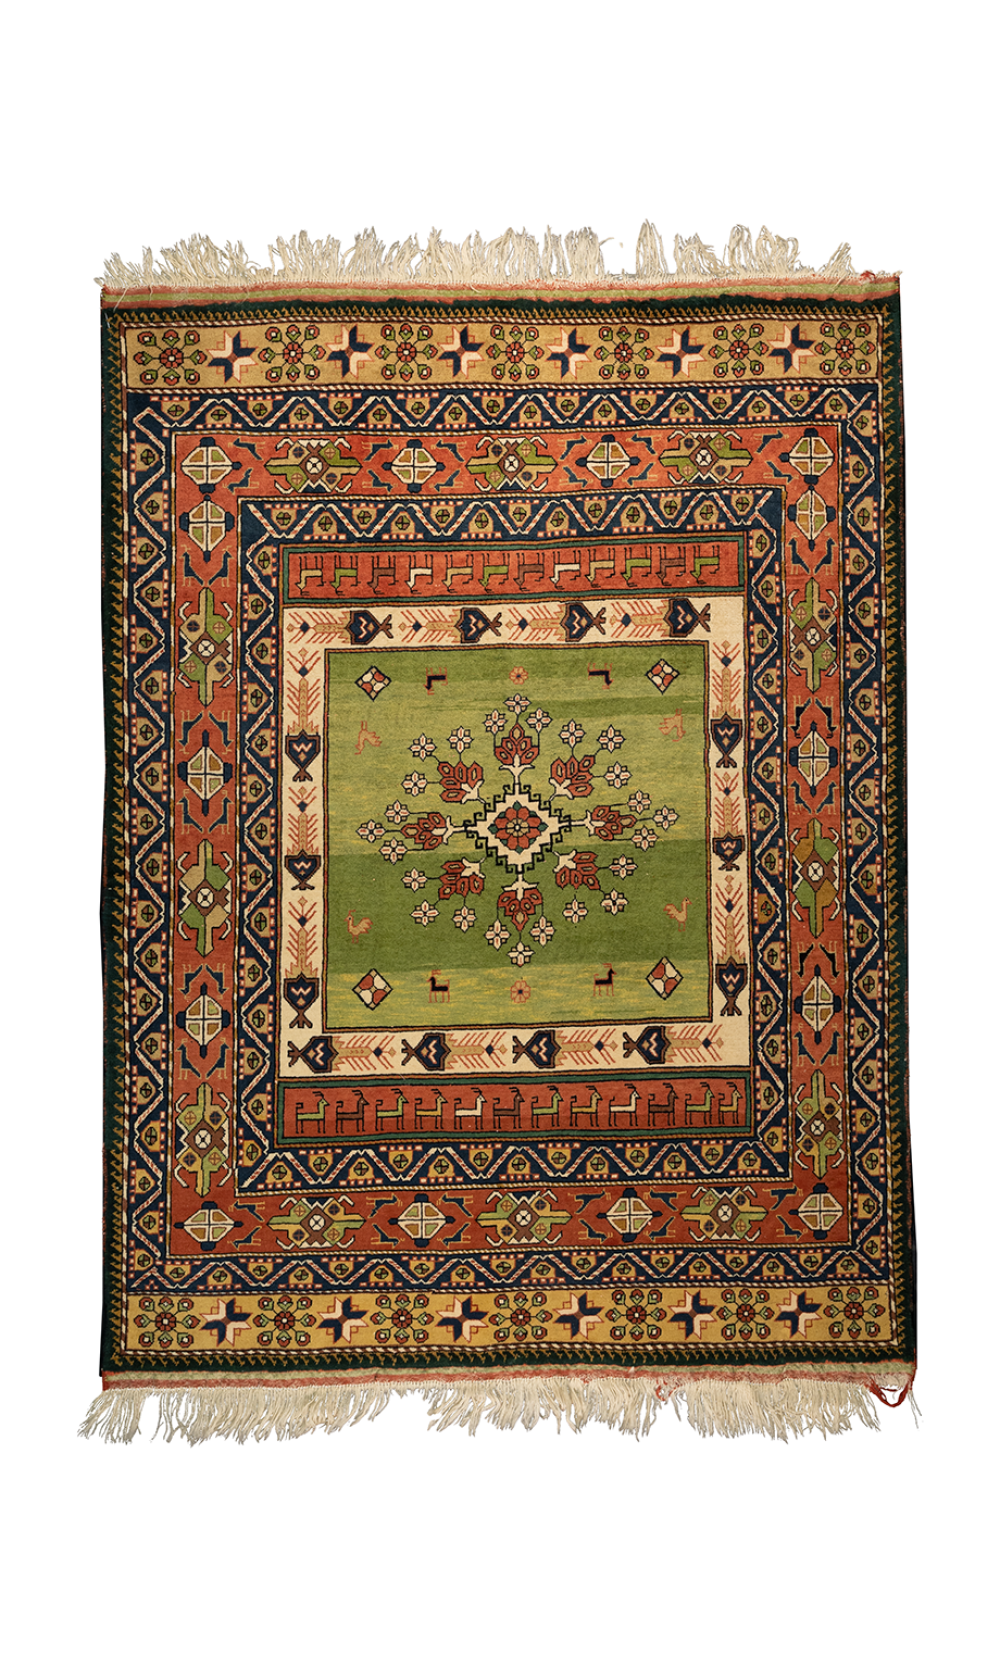 The Handmade Green wool rug from Quchan City, Razavi Khorasan